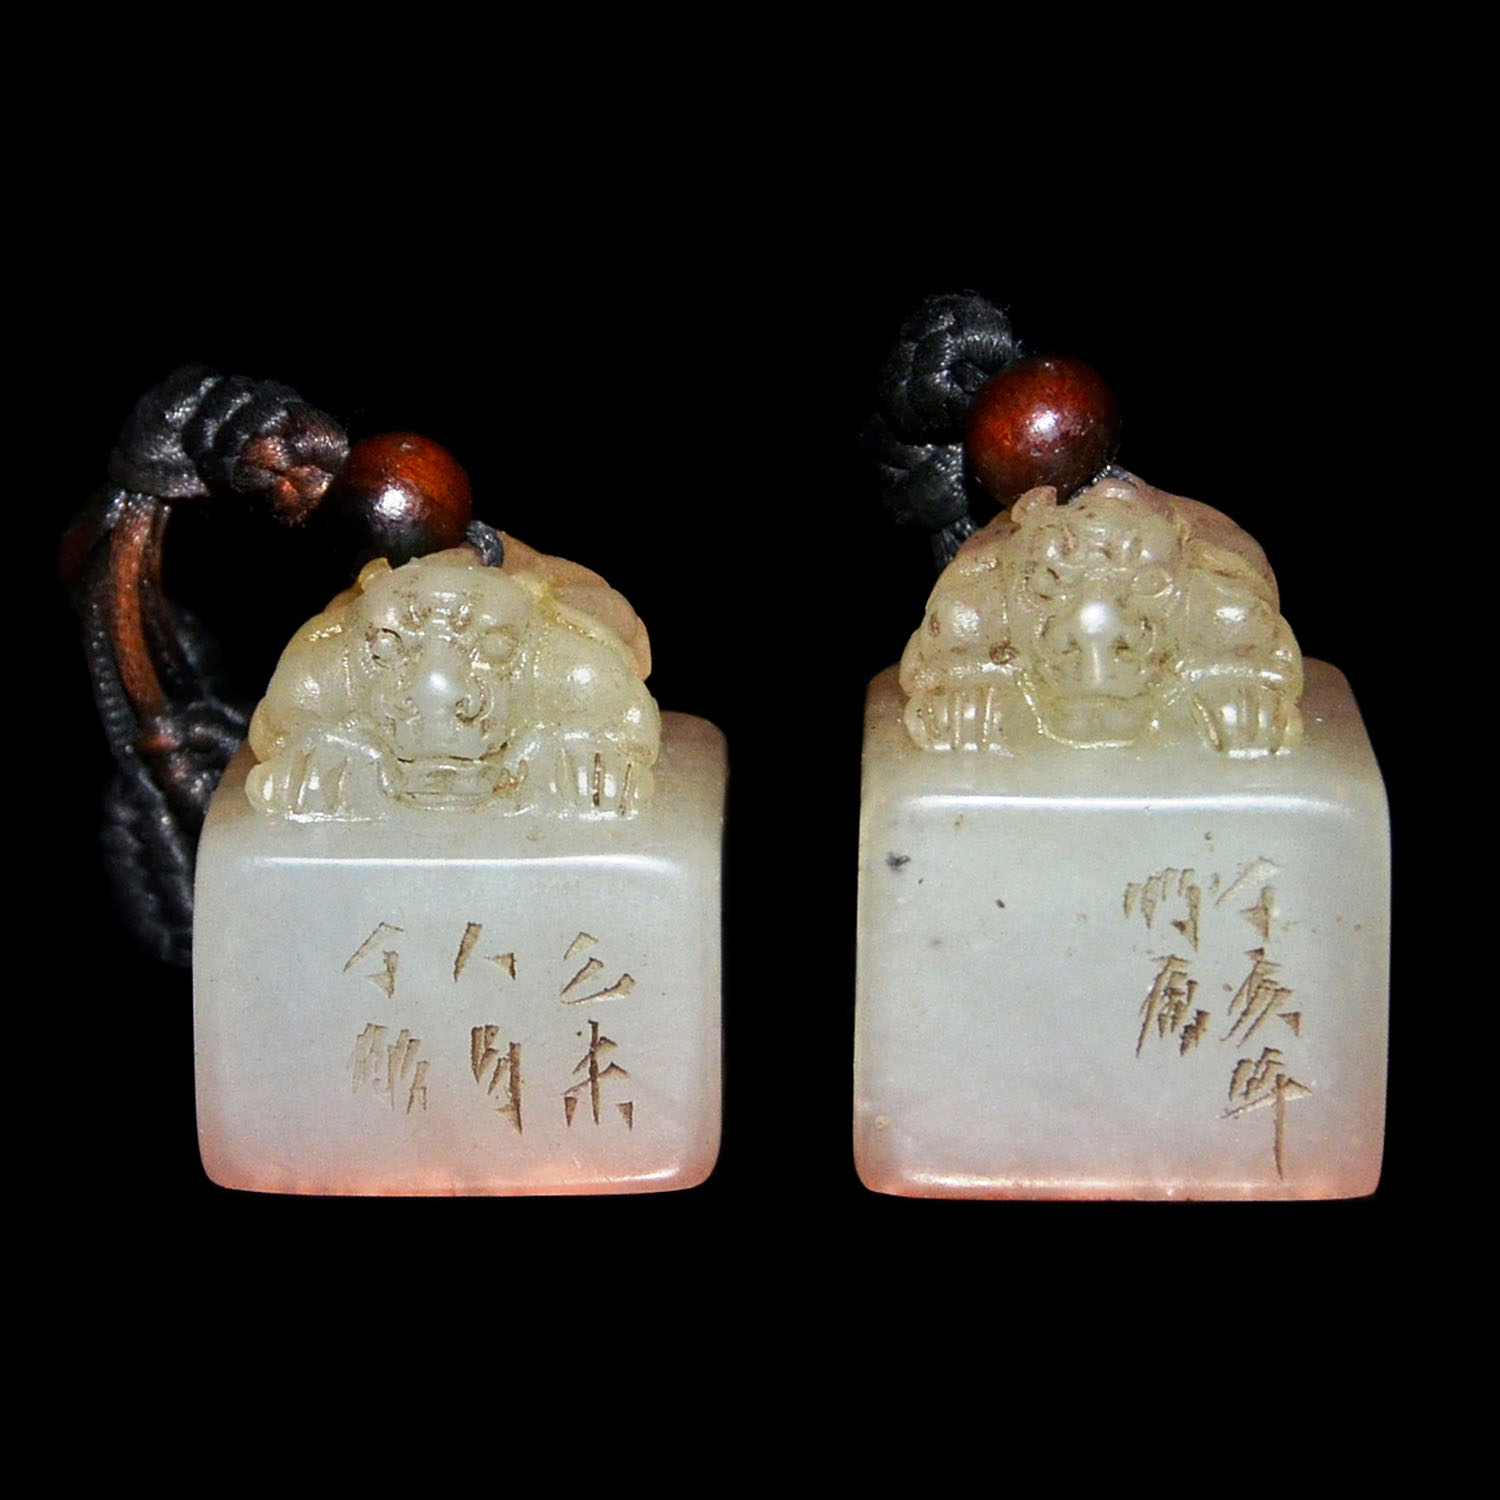 芙蓉石雕荔枝凍獅鈕方印章一對二件 印文(法貴天真)(和風清穆) A Pair of Translucent Furong Stone Square Seals with Carved Lion